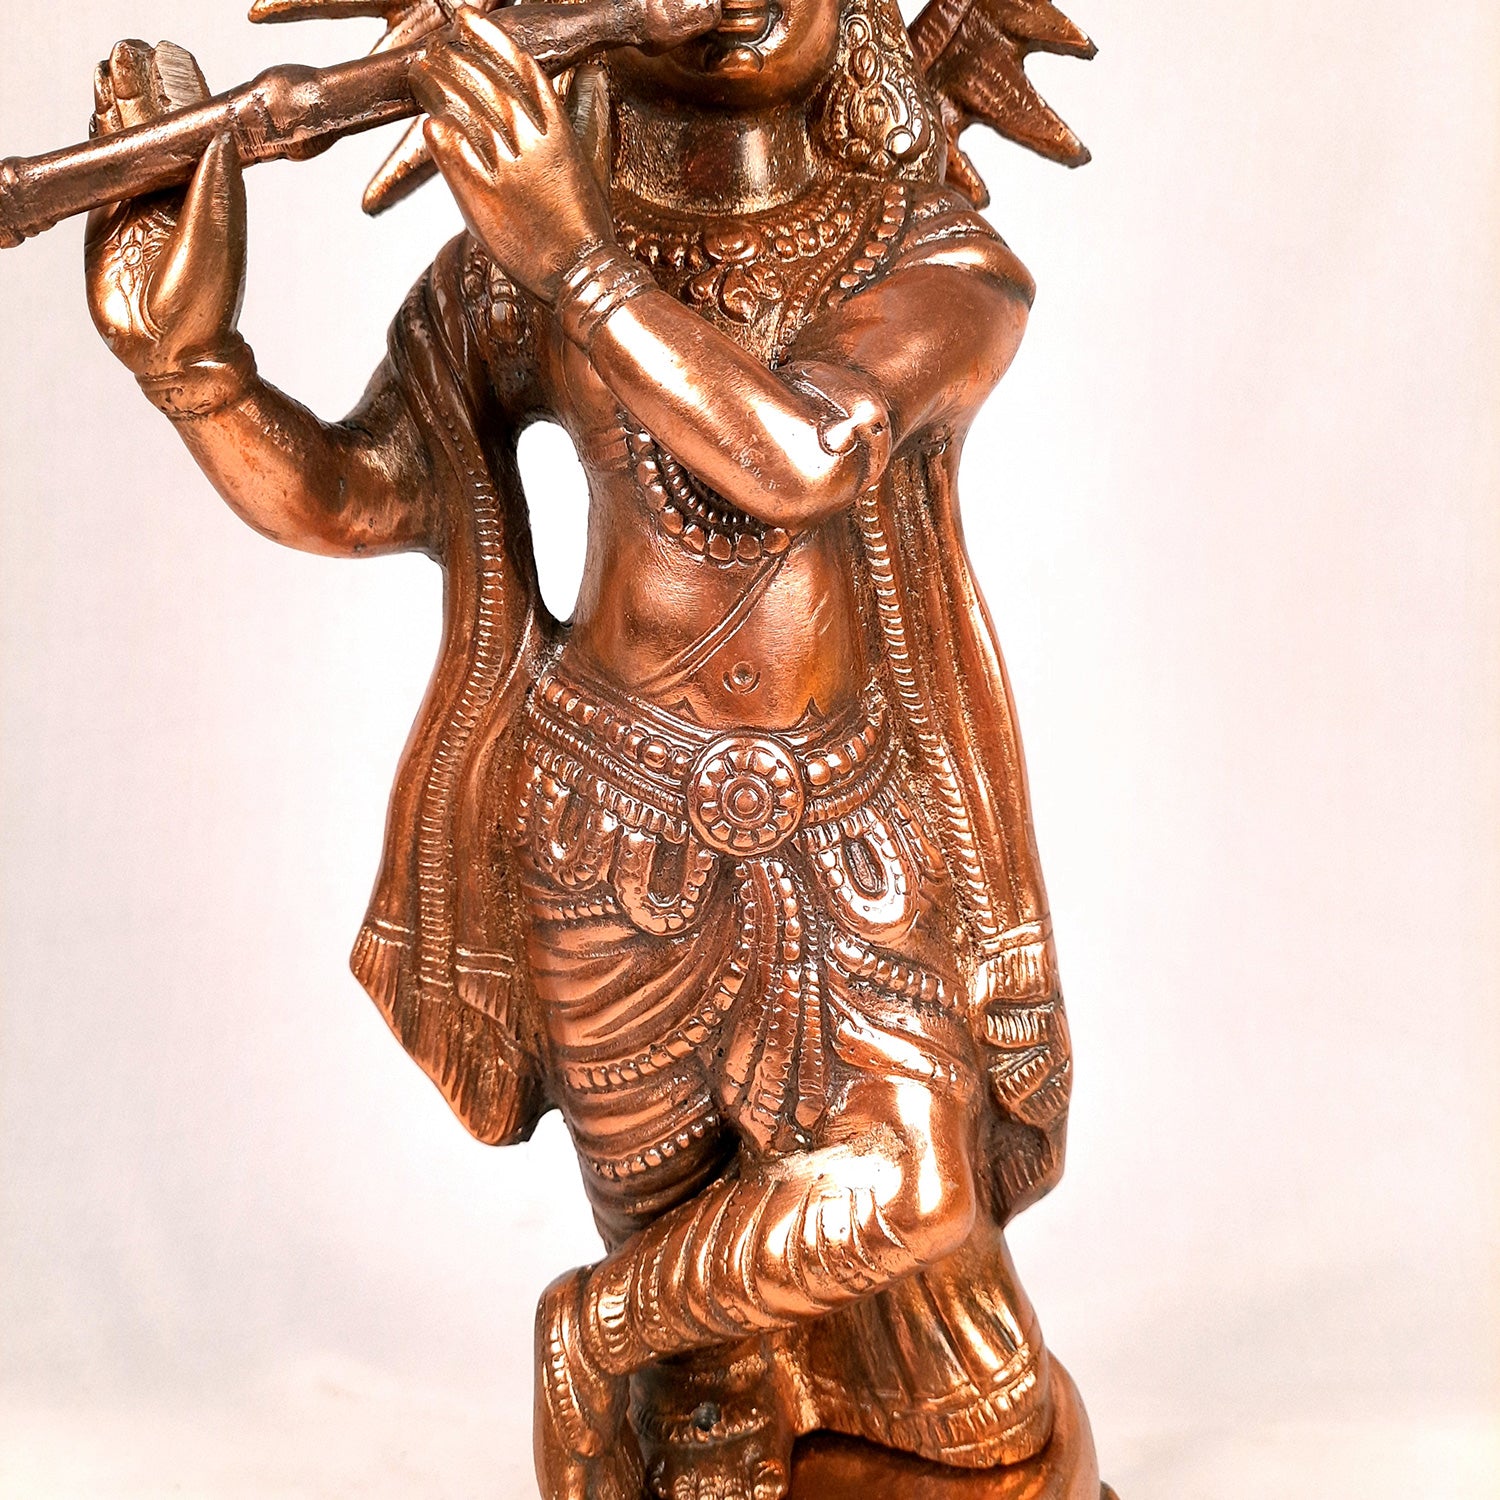 Krishna Statue | Shri Krishna Idol Playing Flute Design | Lord Krishna Murti - for Home, Living Room, Office, Puja , Entrance Decoration & Gifts - Apkamart